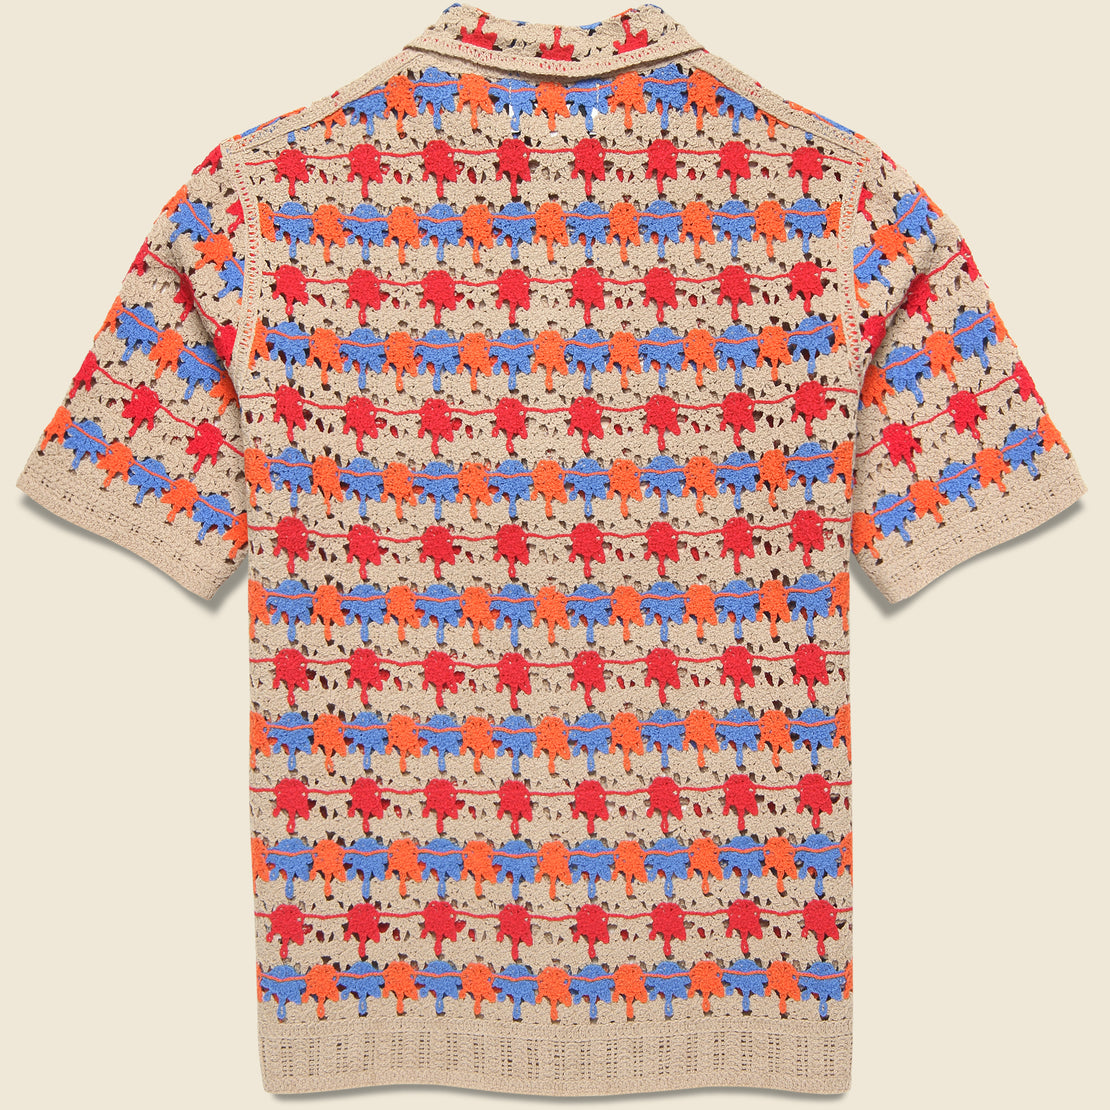 Porto Splash Crochet Shirt - Red/Blue/Off White - Wax London - STAG Provisions - Tops - S/S Knit